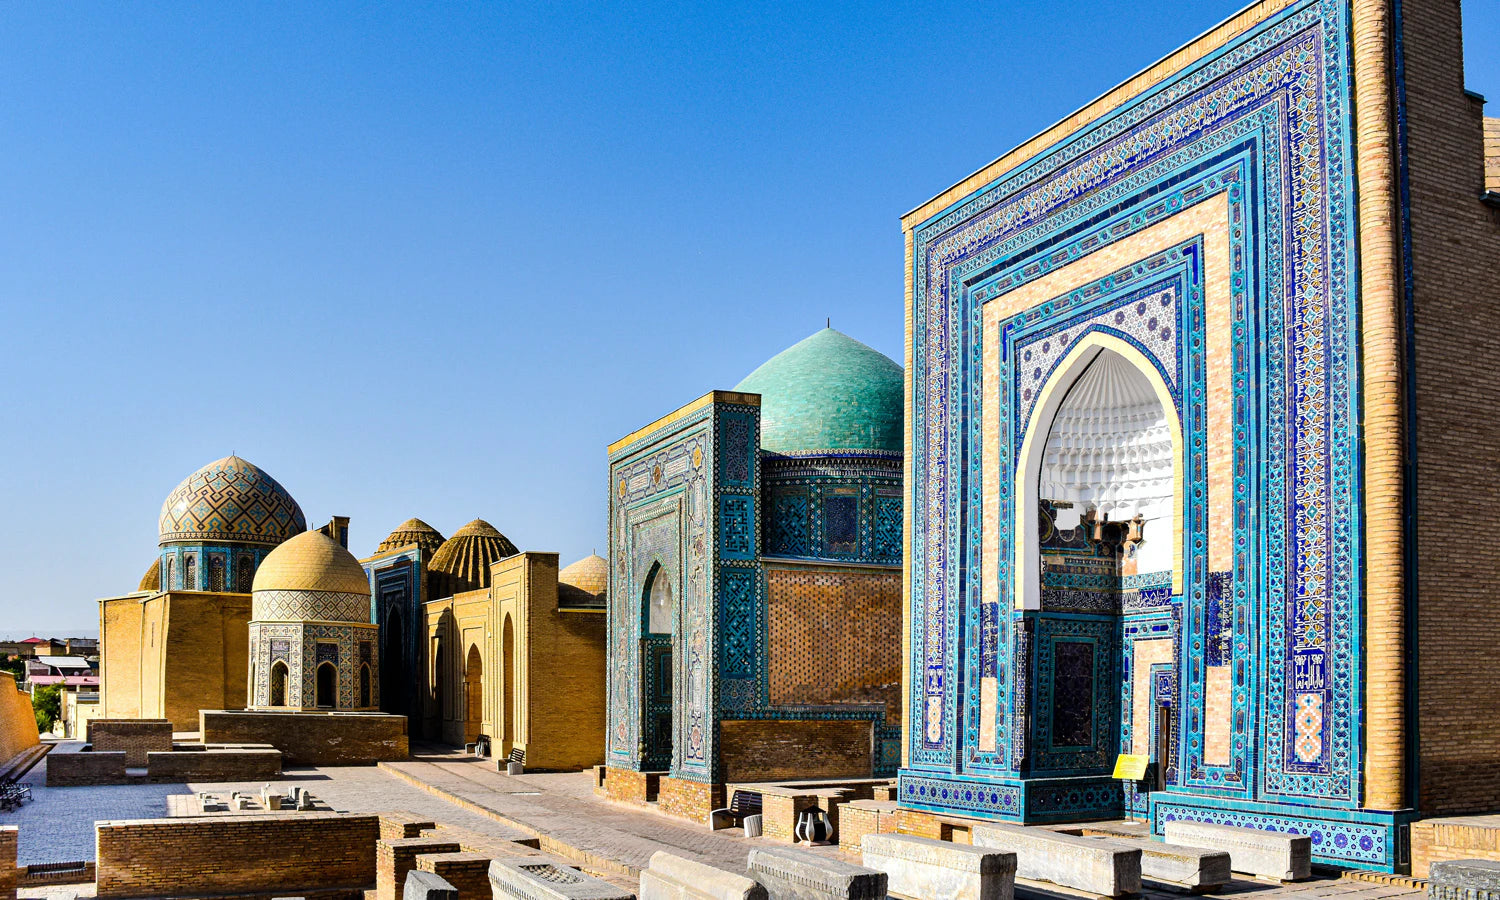 Samarkand – The Heart of the Legendary Silk Road